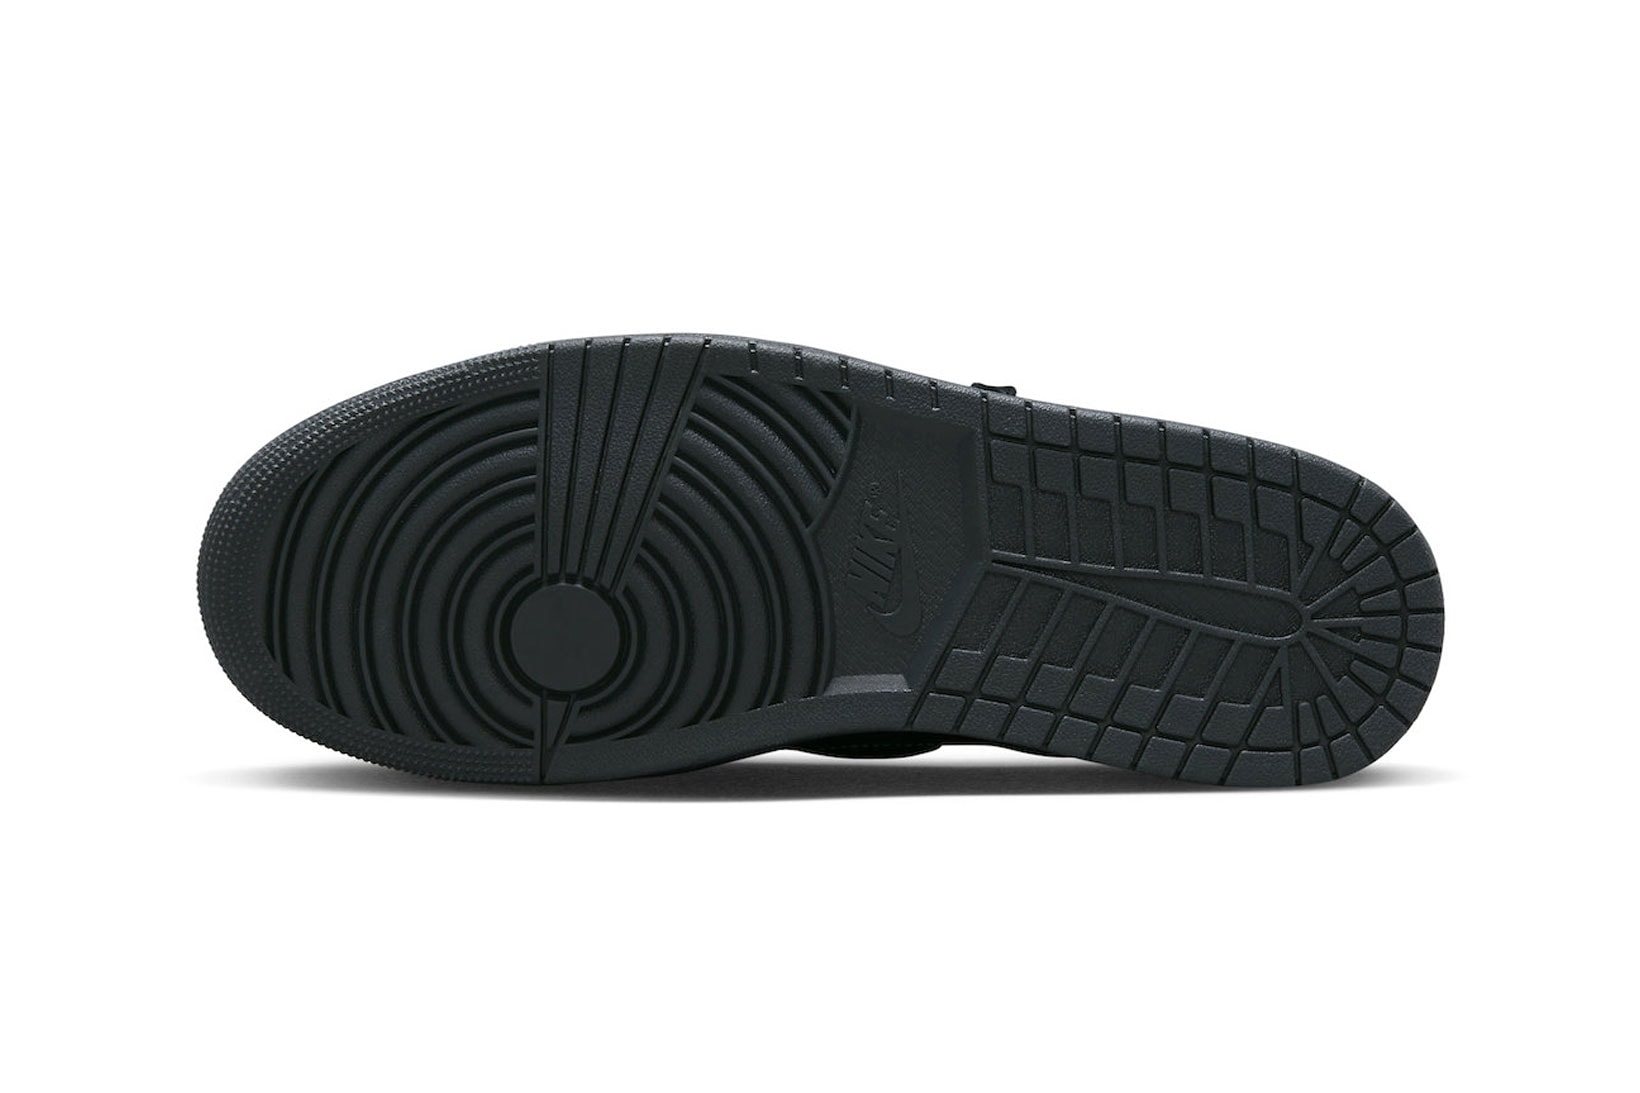 Travis Scott Nike Air Jordan 1 Low "Black Phantom" Cactus Jack Release Where to buy